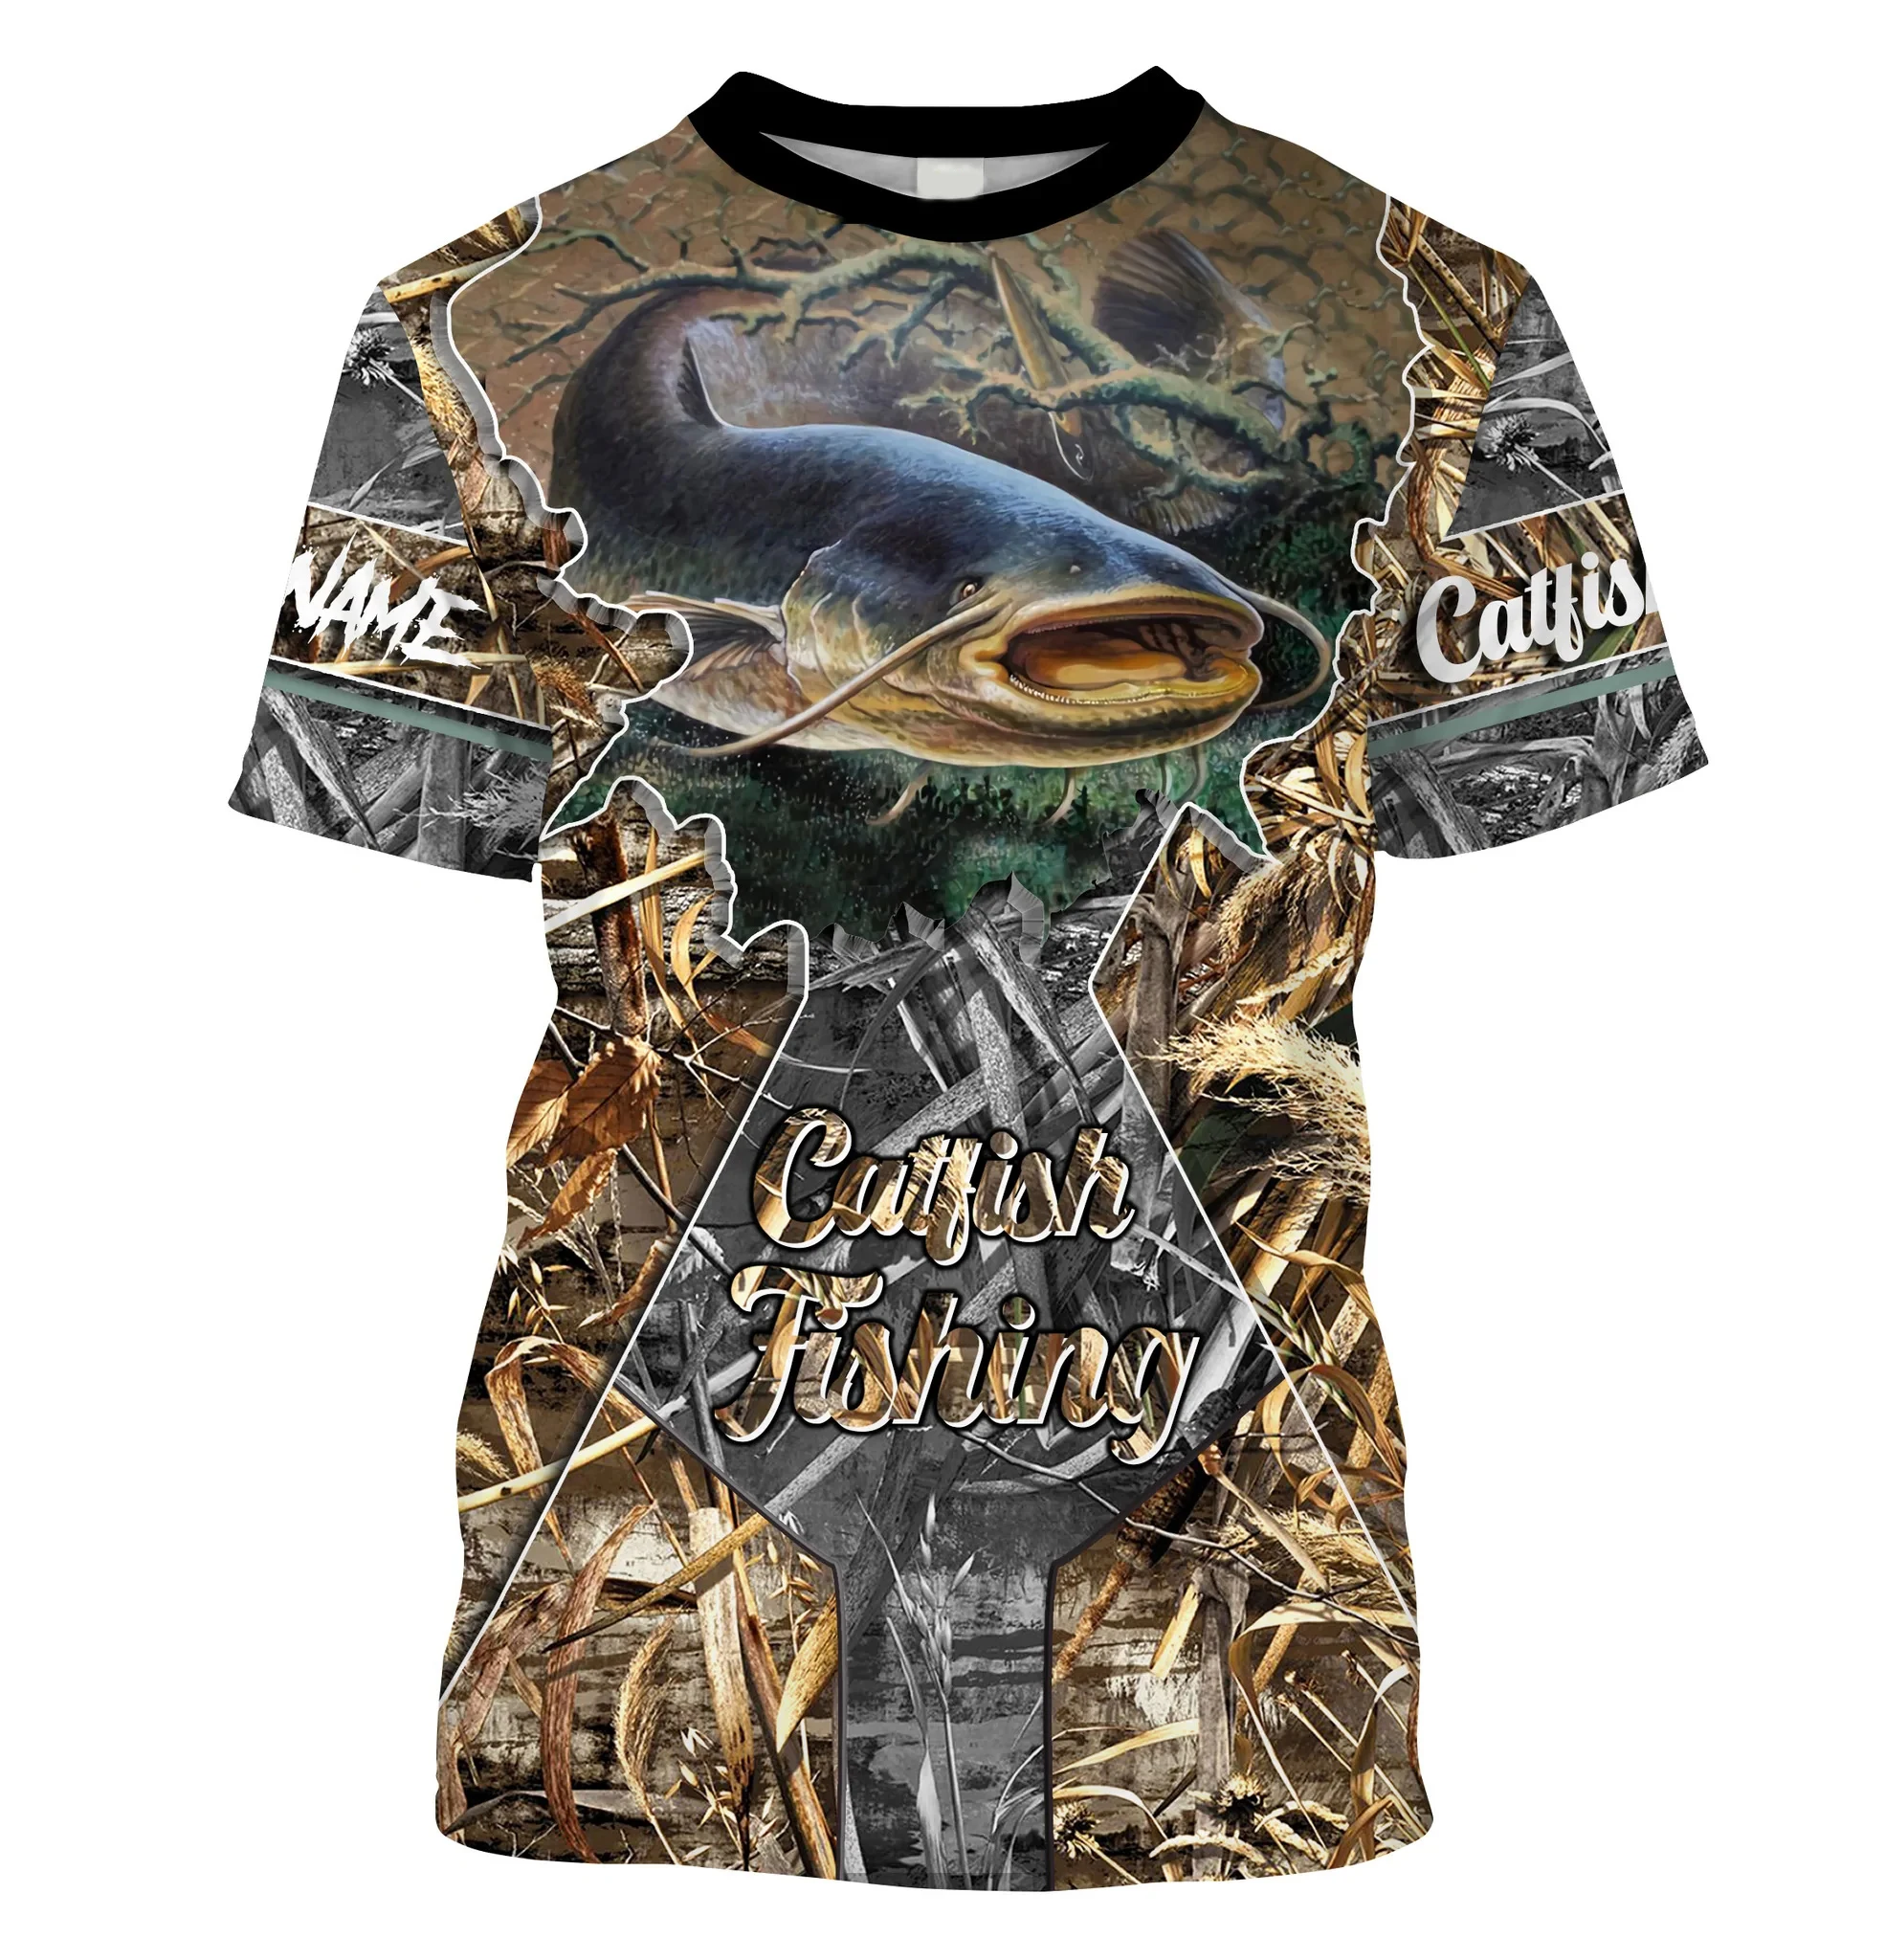 Catfish Fishing Camo Customize 3D Printed Mens t shirt Cool